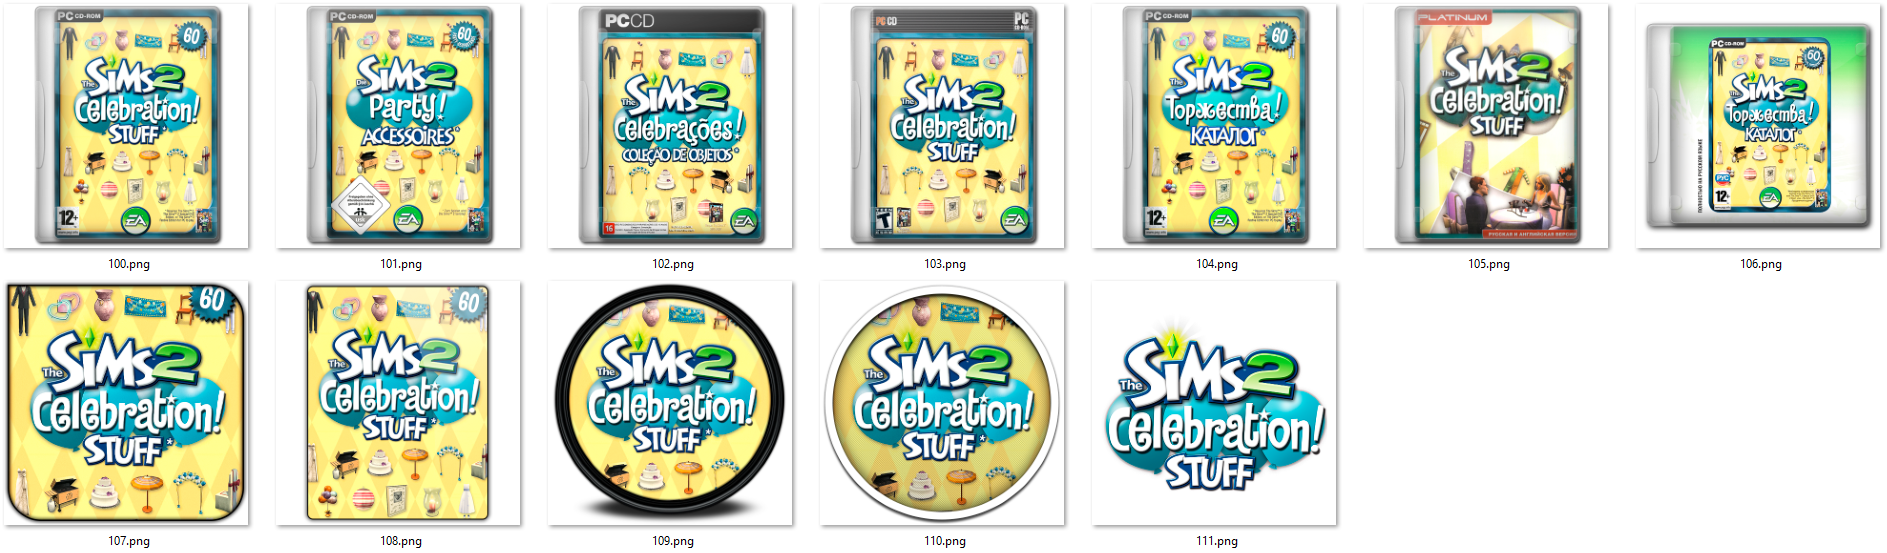 Иконки из набора к игре Sims 2 Celebration Stuff